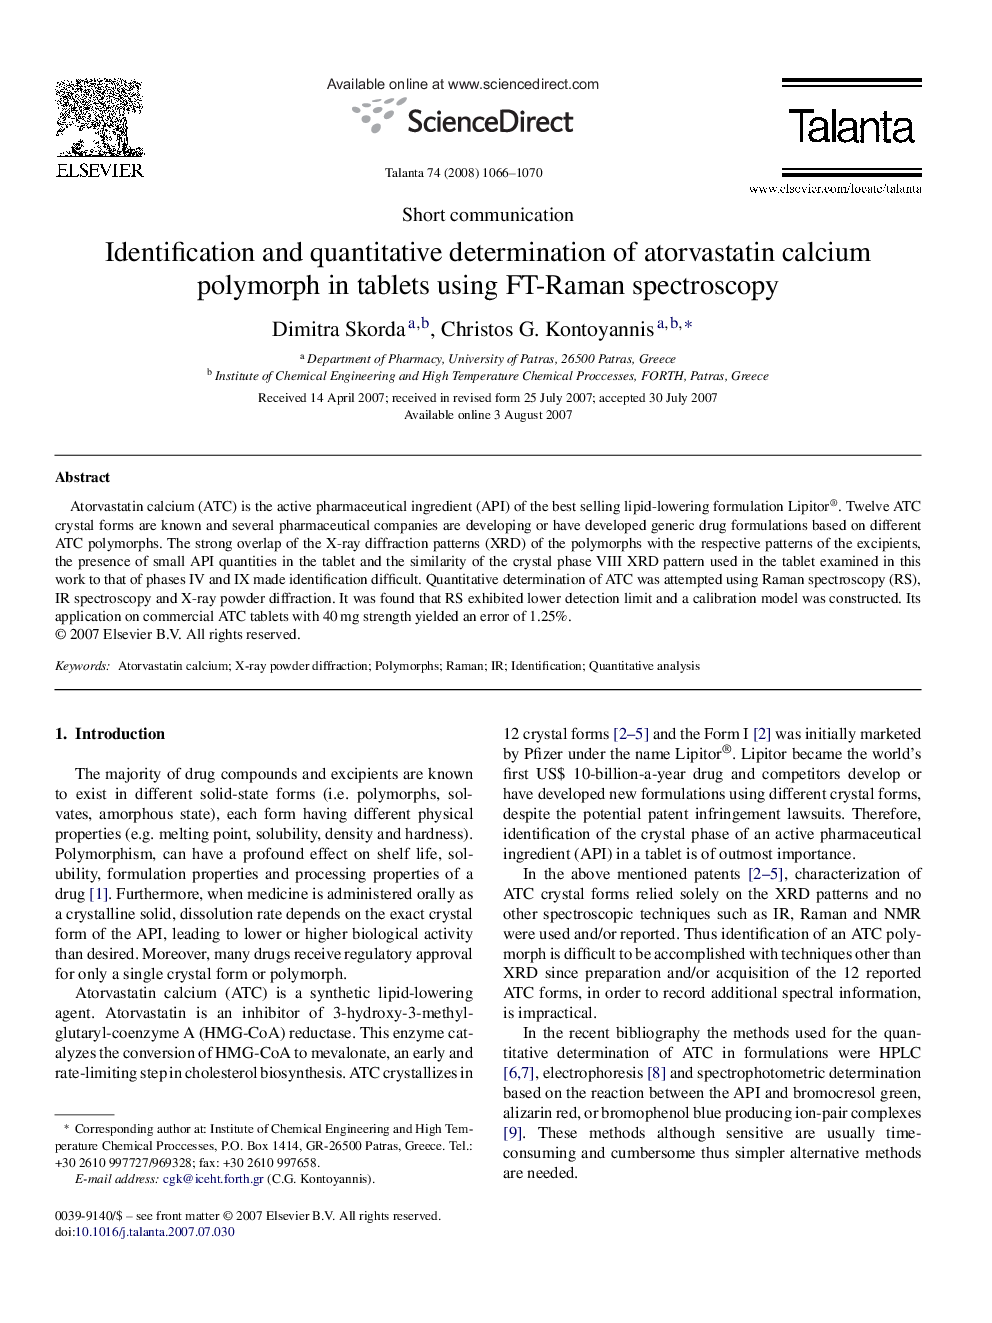 Identification and quantitative determination of atorvastatin calcium polymorph in tablets using FT-Raman spectroscopy